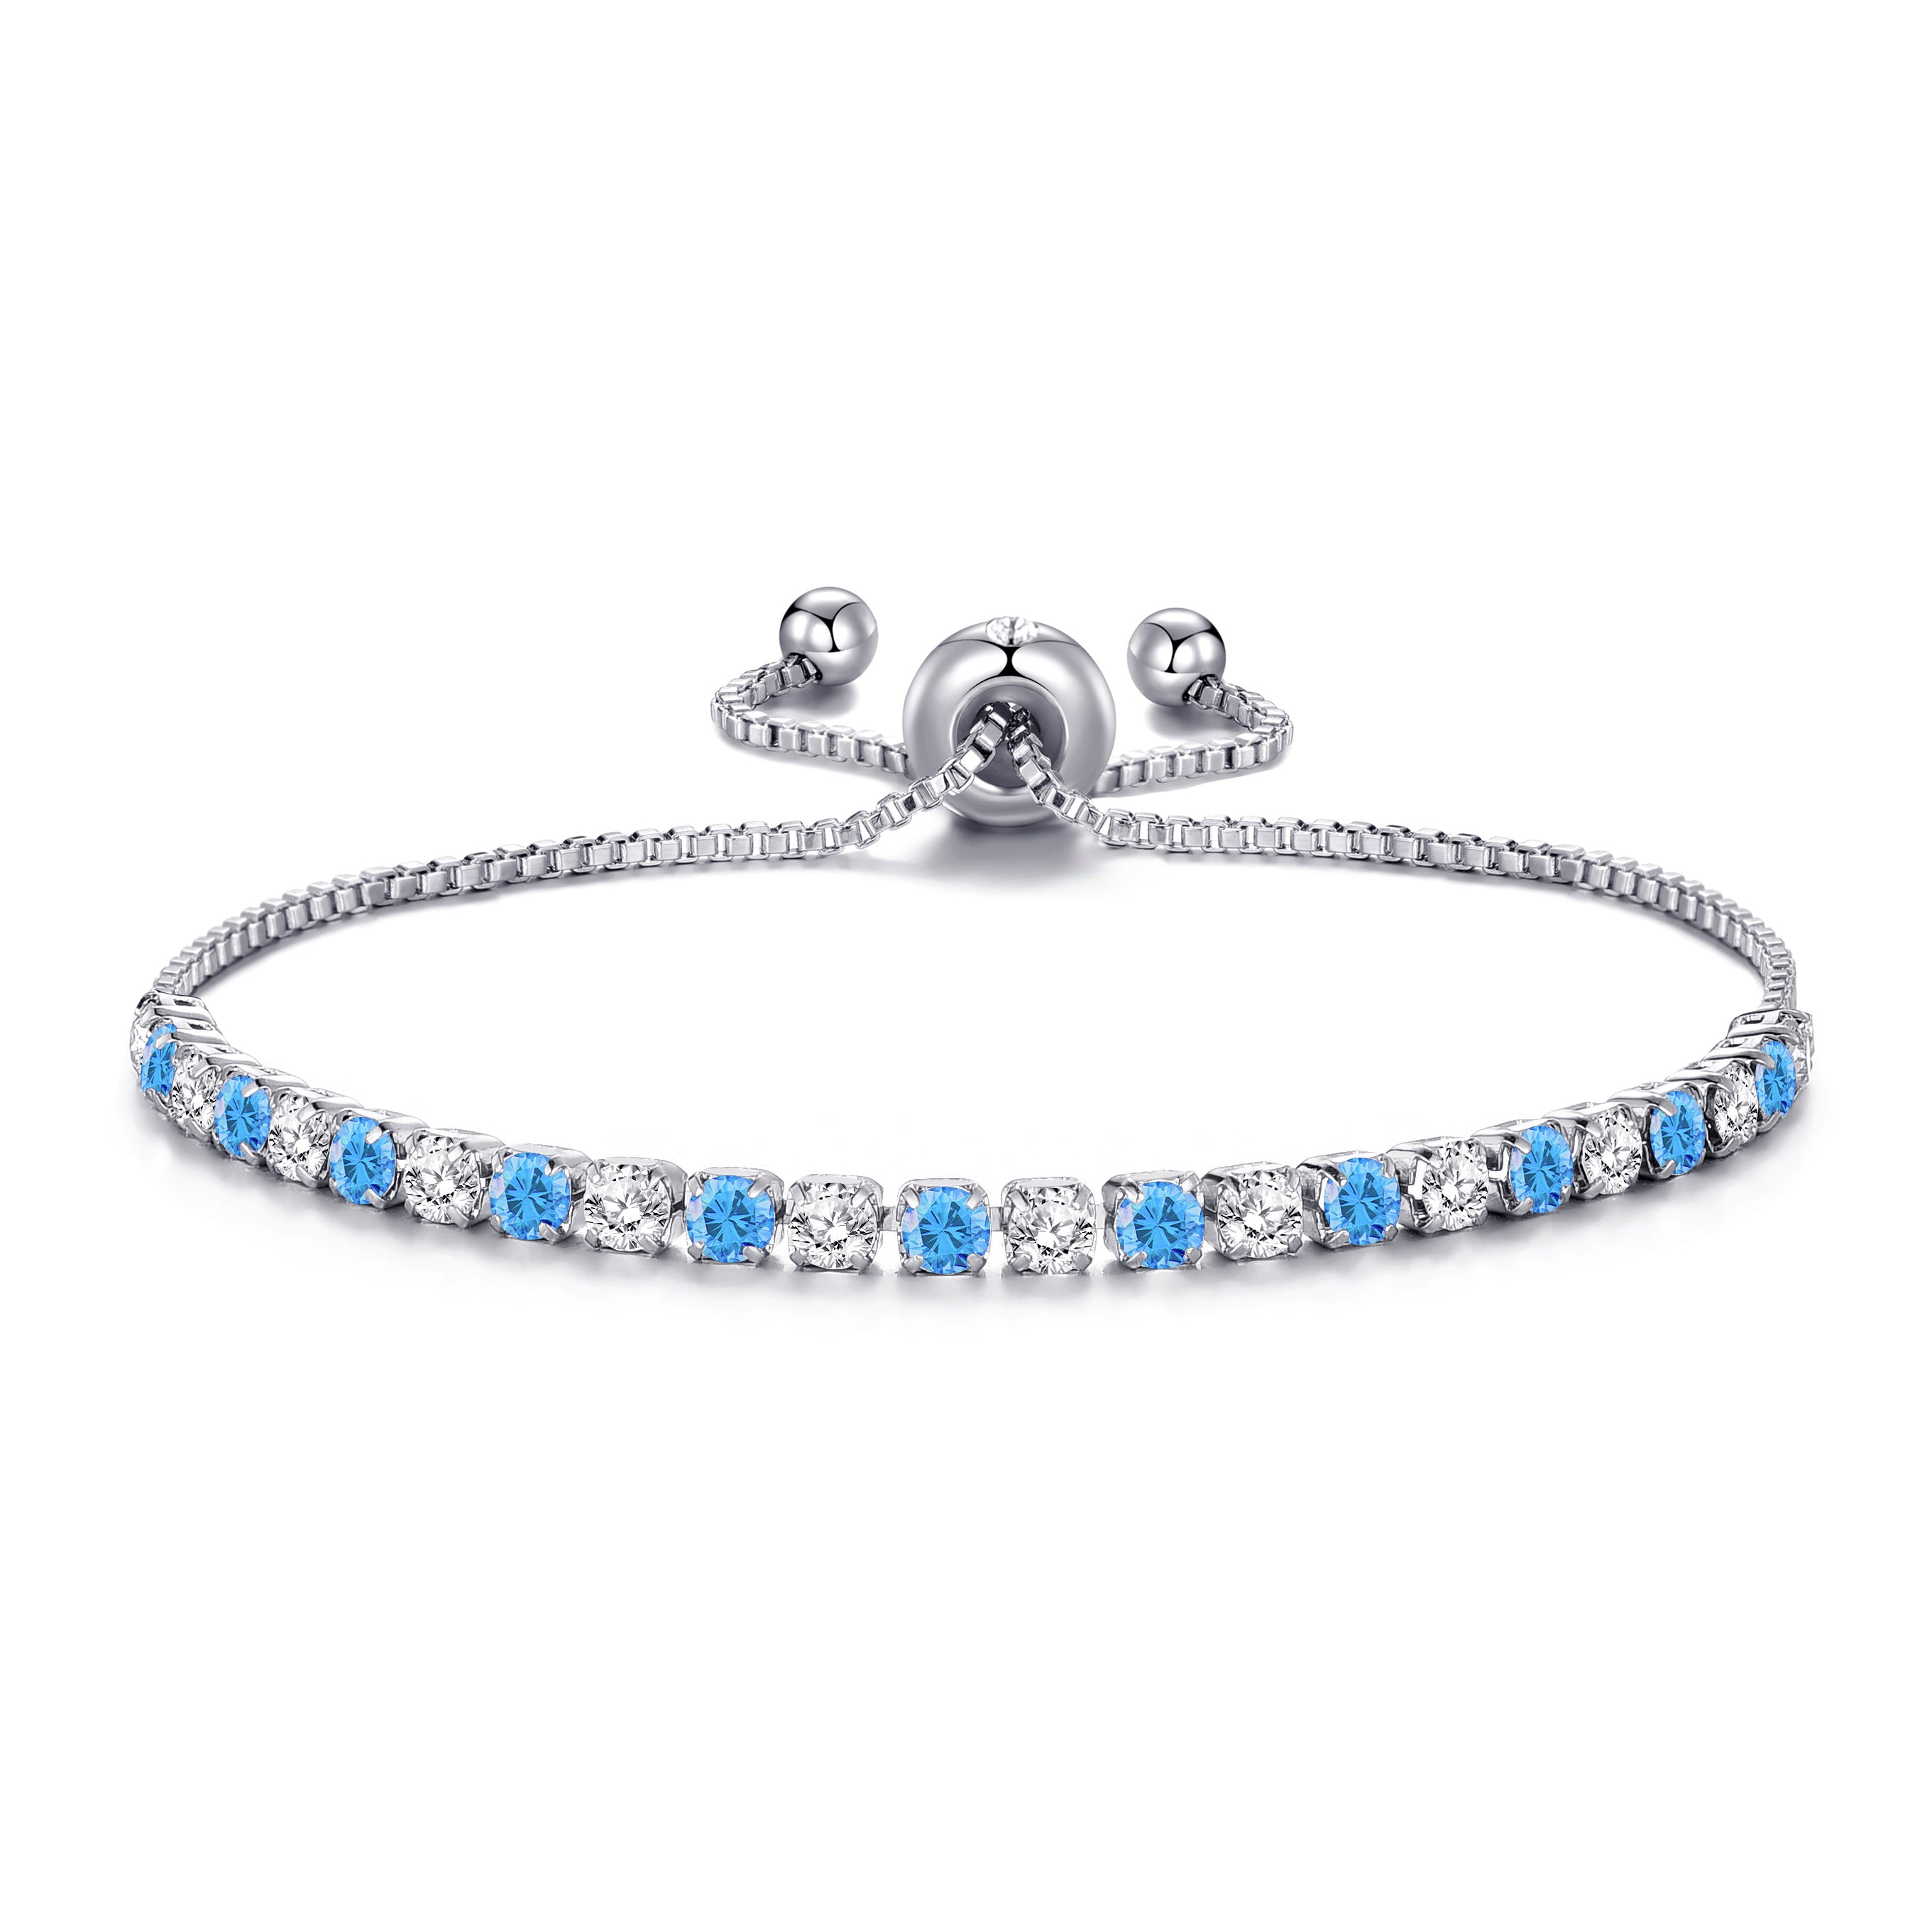 Silver Plated Adjustable Blue Tennis Bracelet Created with Zircondia® Crystals by Philip Jones Jewellery